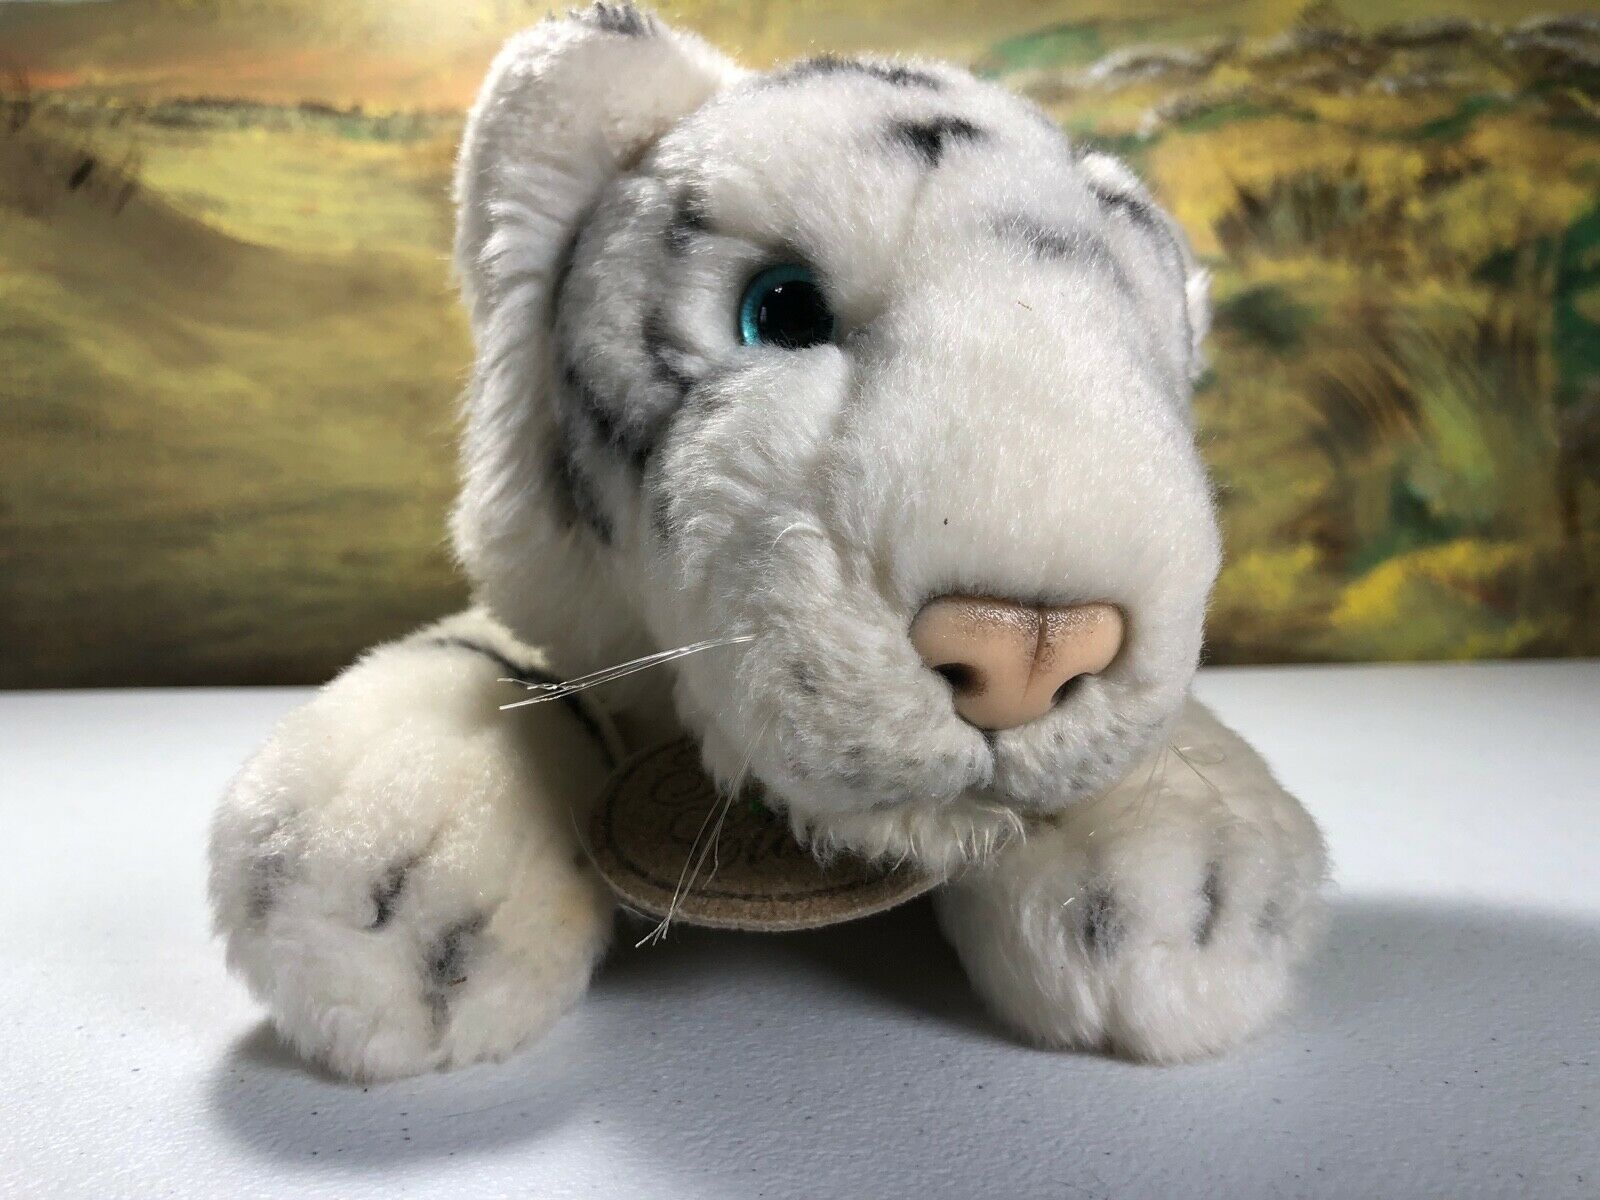 Russ Yomiko Classics" White Tiger Cub Beanie Plush Stuffed Animal Toy